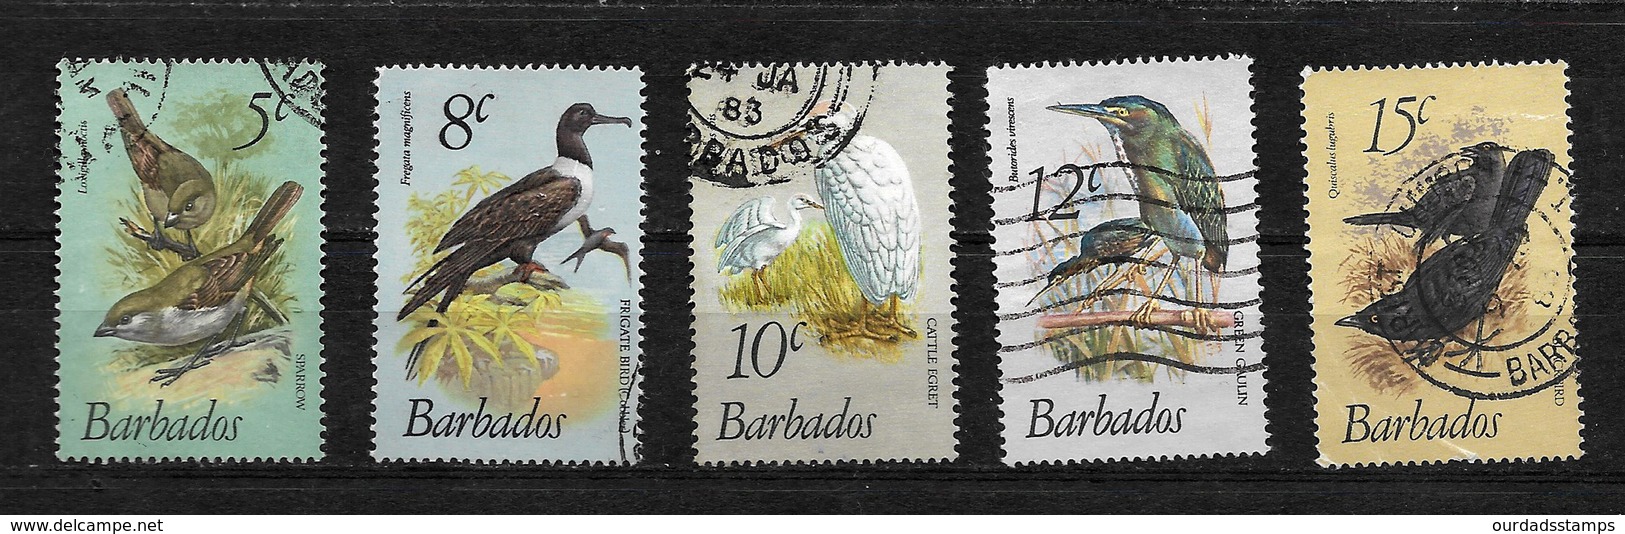 Barbados QEII 1979 Birds,, Small Selection To $2.50 Used (7204) - Barbados (1966-...)